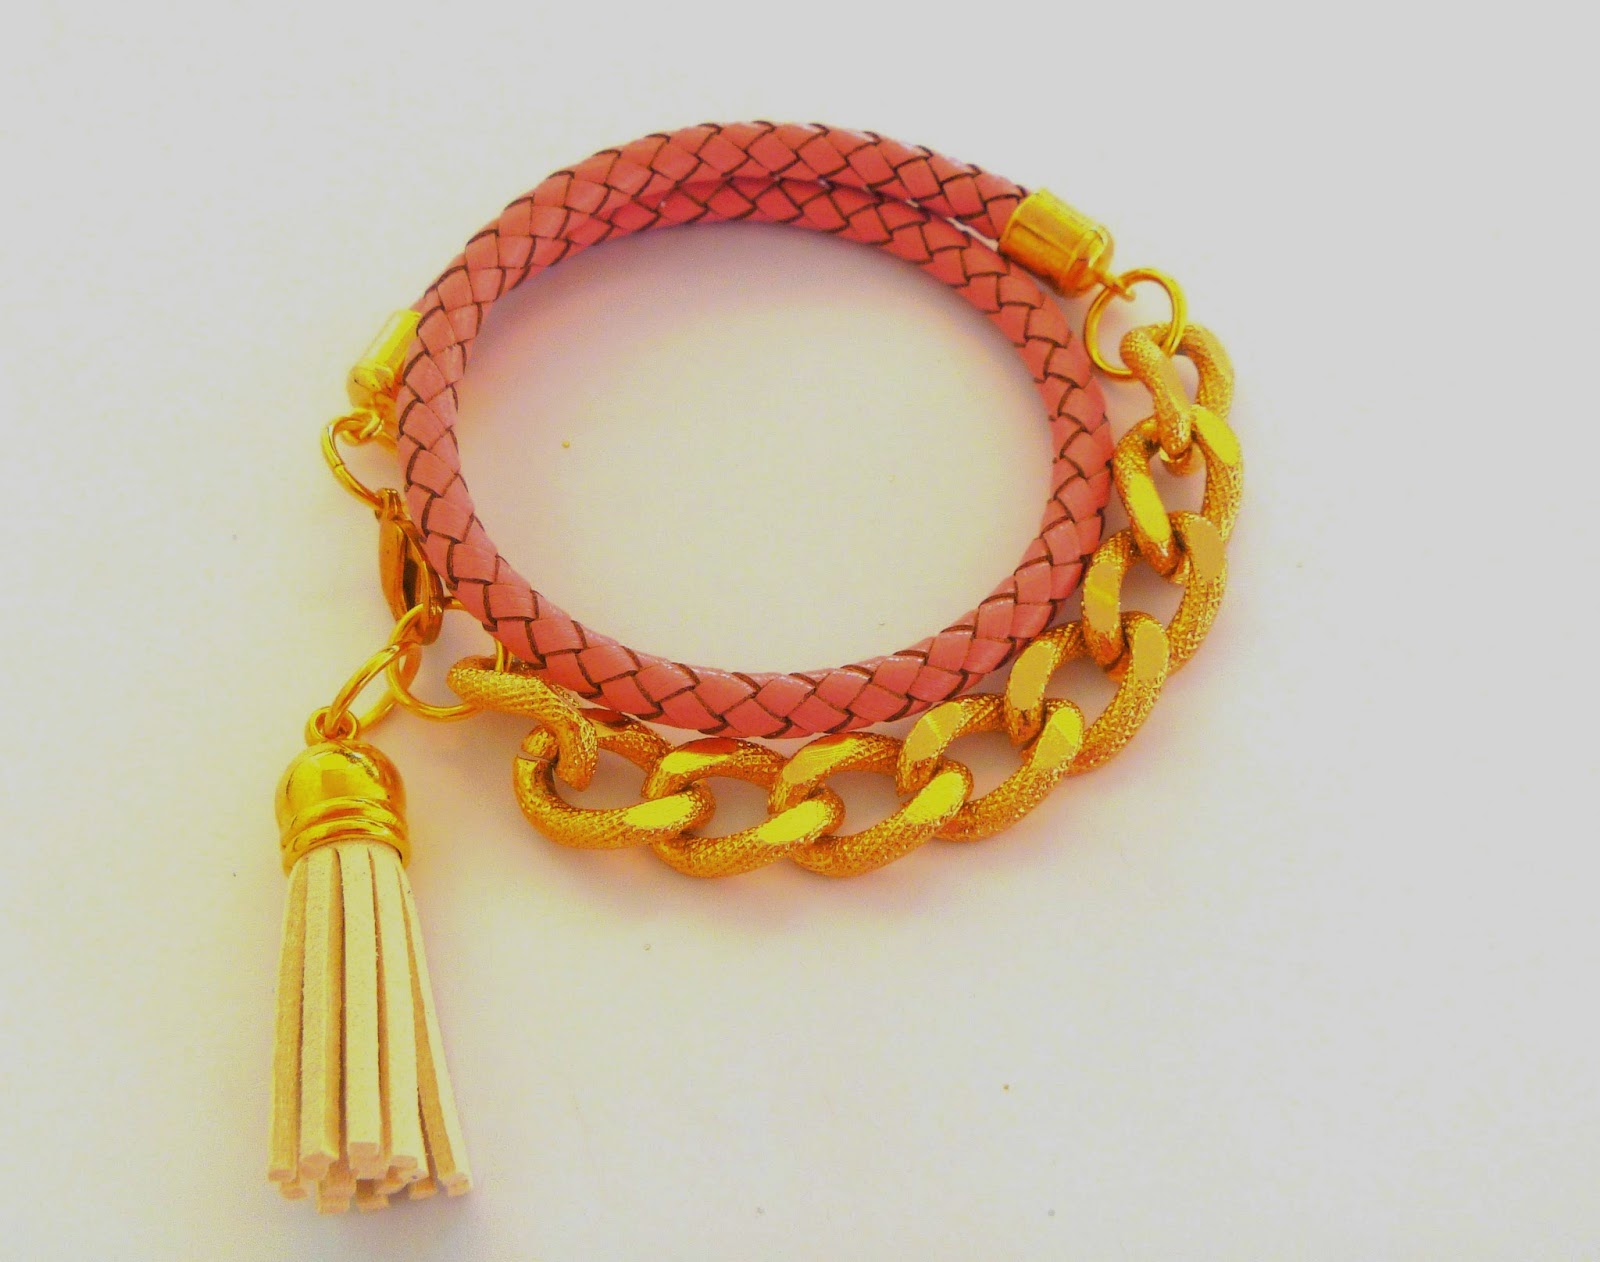 http://happygirlycrafty.blogspot.gr/2014/11/chain-and-leather-wrap-bracelet-diy.html